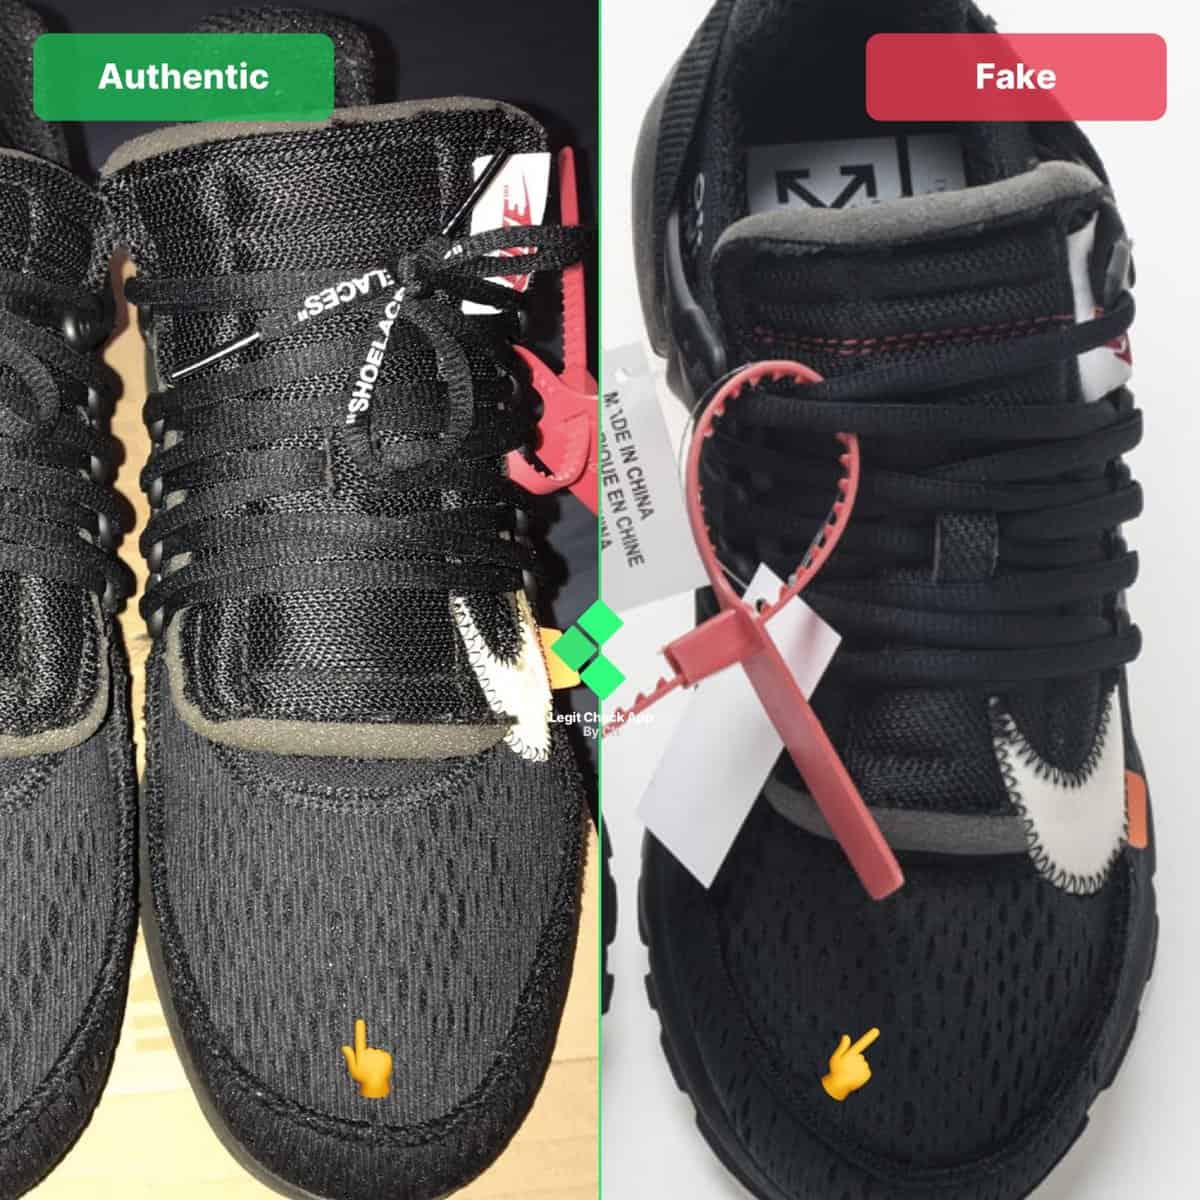 How To Spot Fake Off-White Presto Black - Real Vs Fake Off-White Nike ...